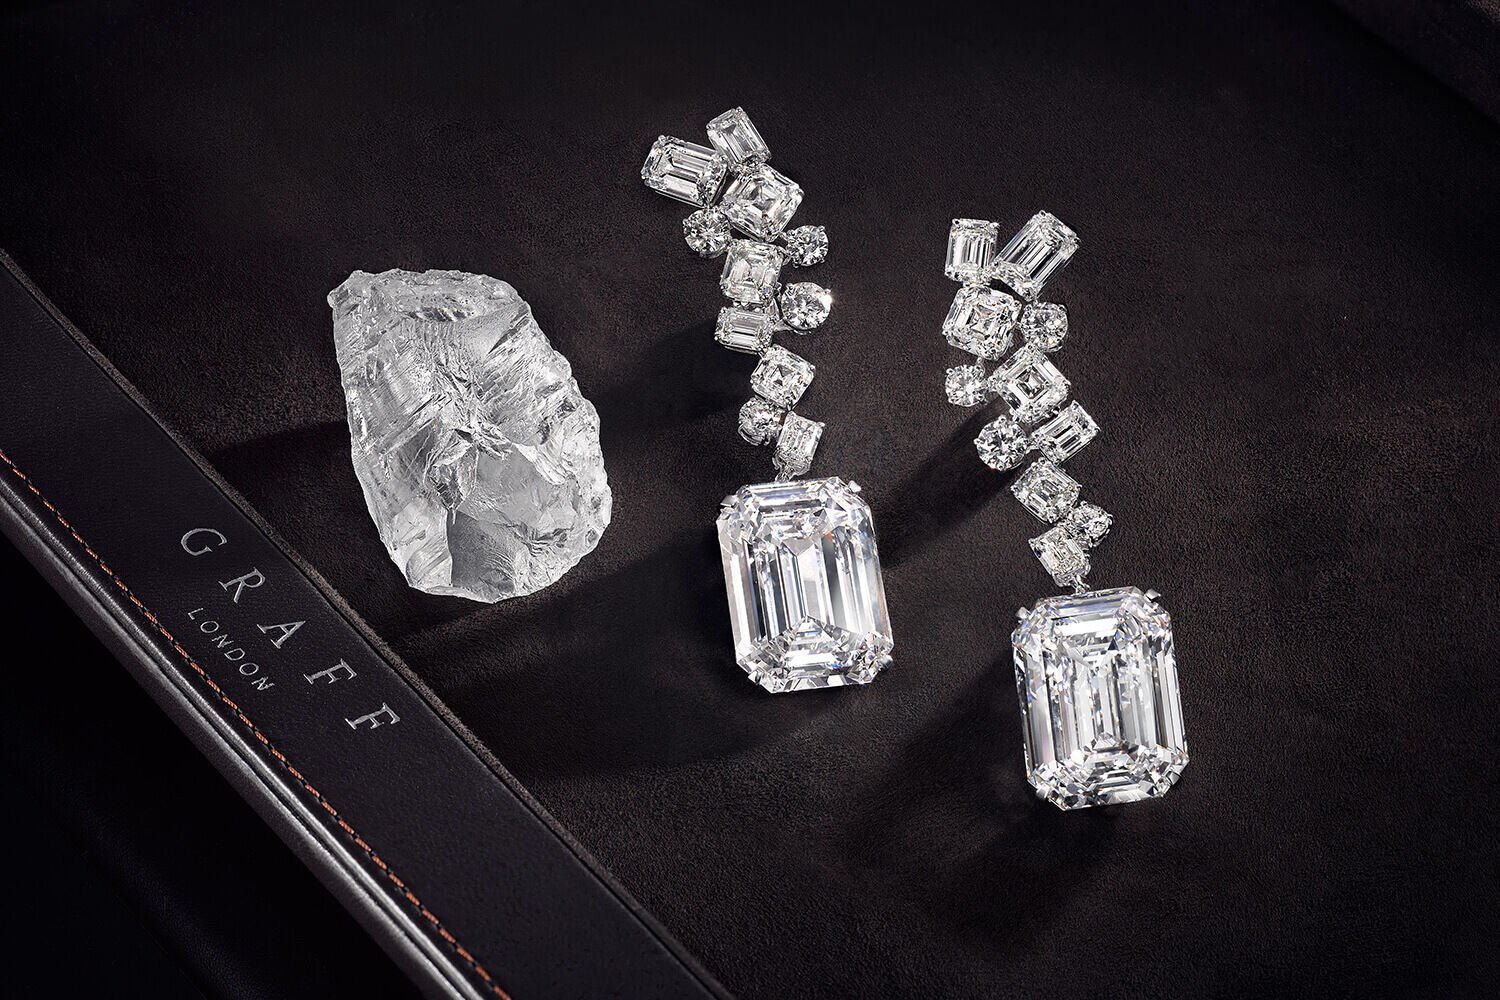 The Graff Eternal Twins - two identical D Flawless emerald cut diamonds weighing 50.23 carats each